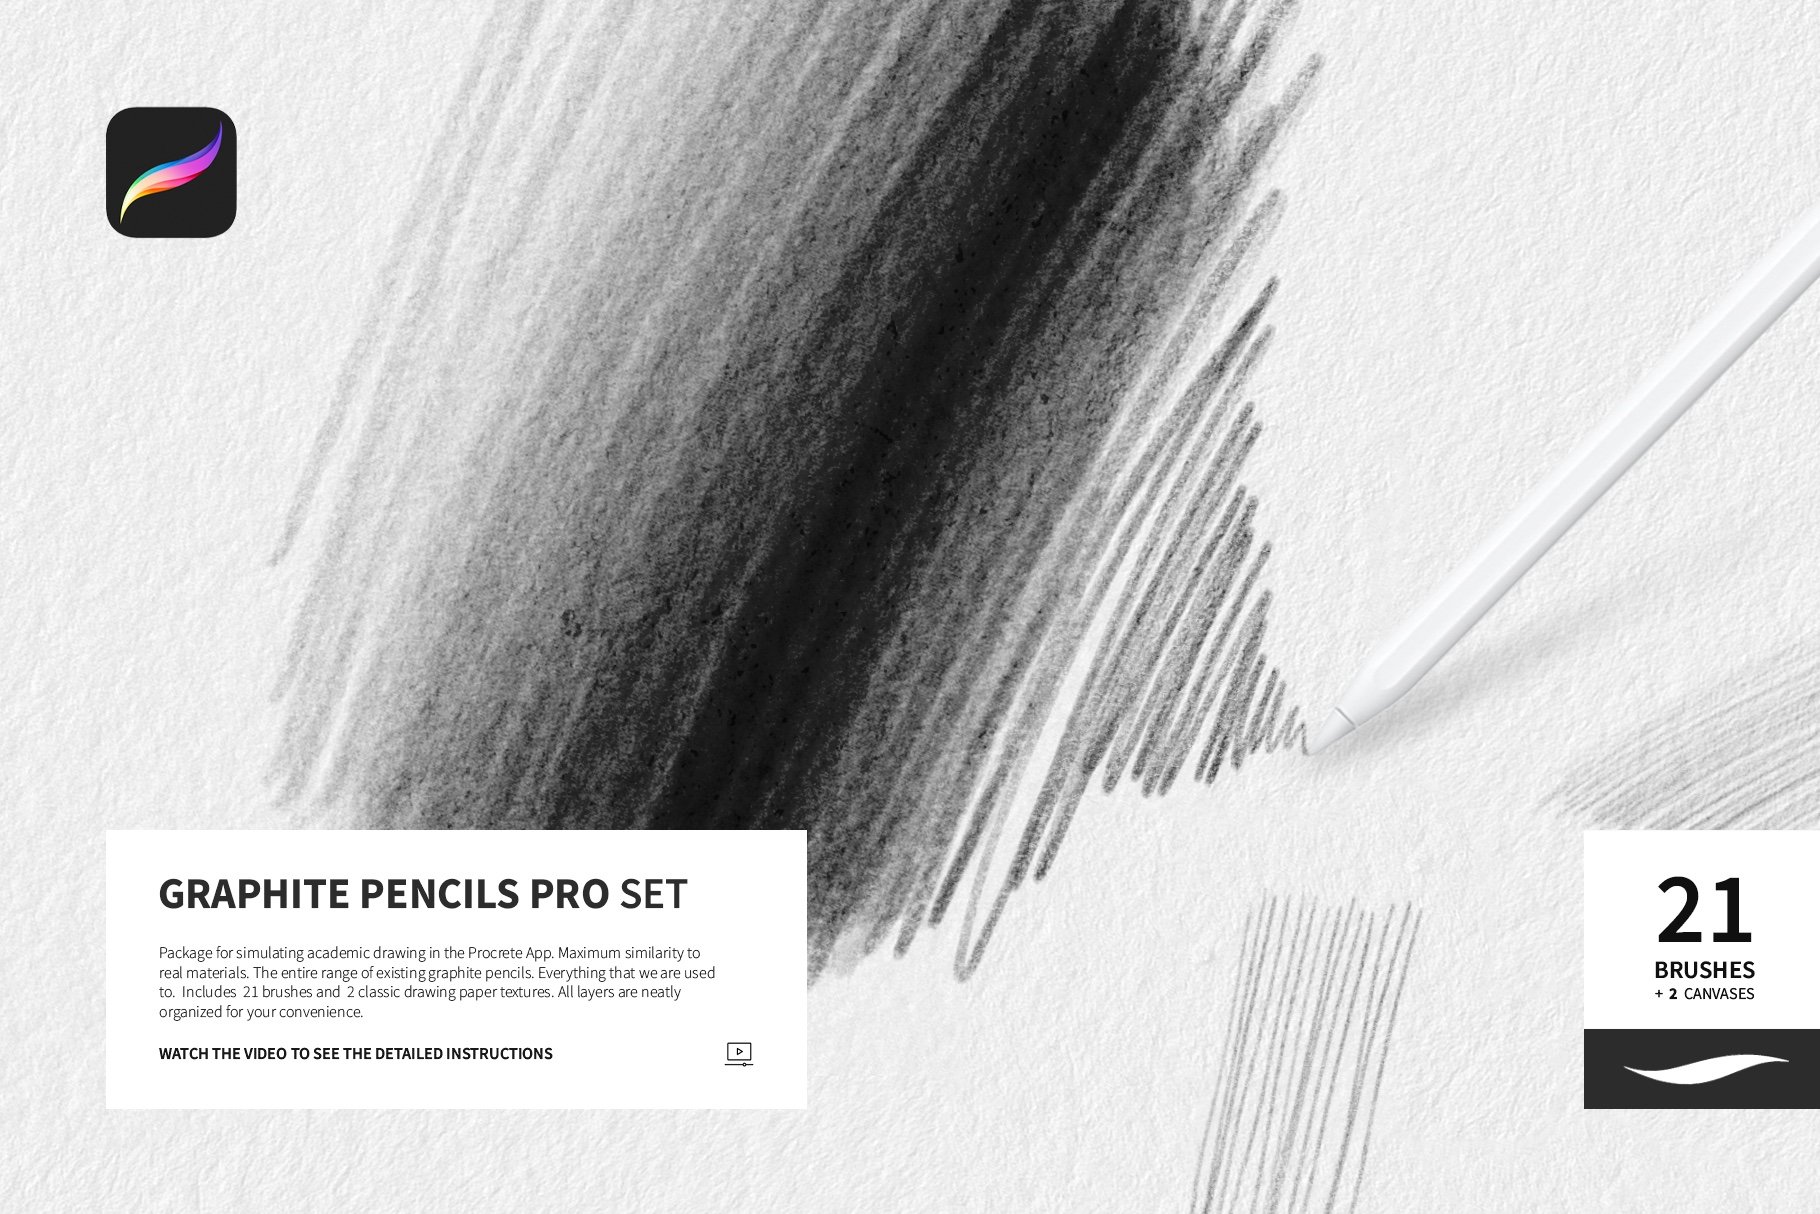 Graphite Pencils for Procreate cover image.